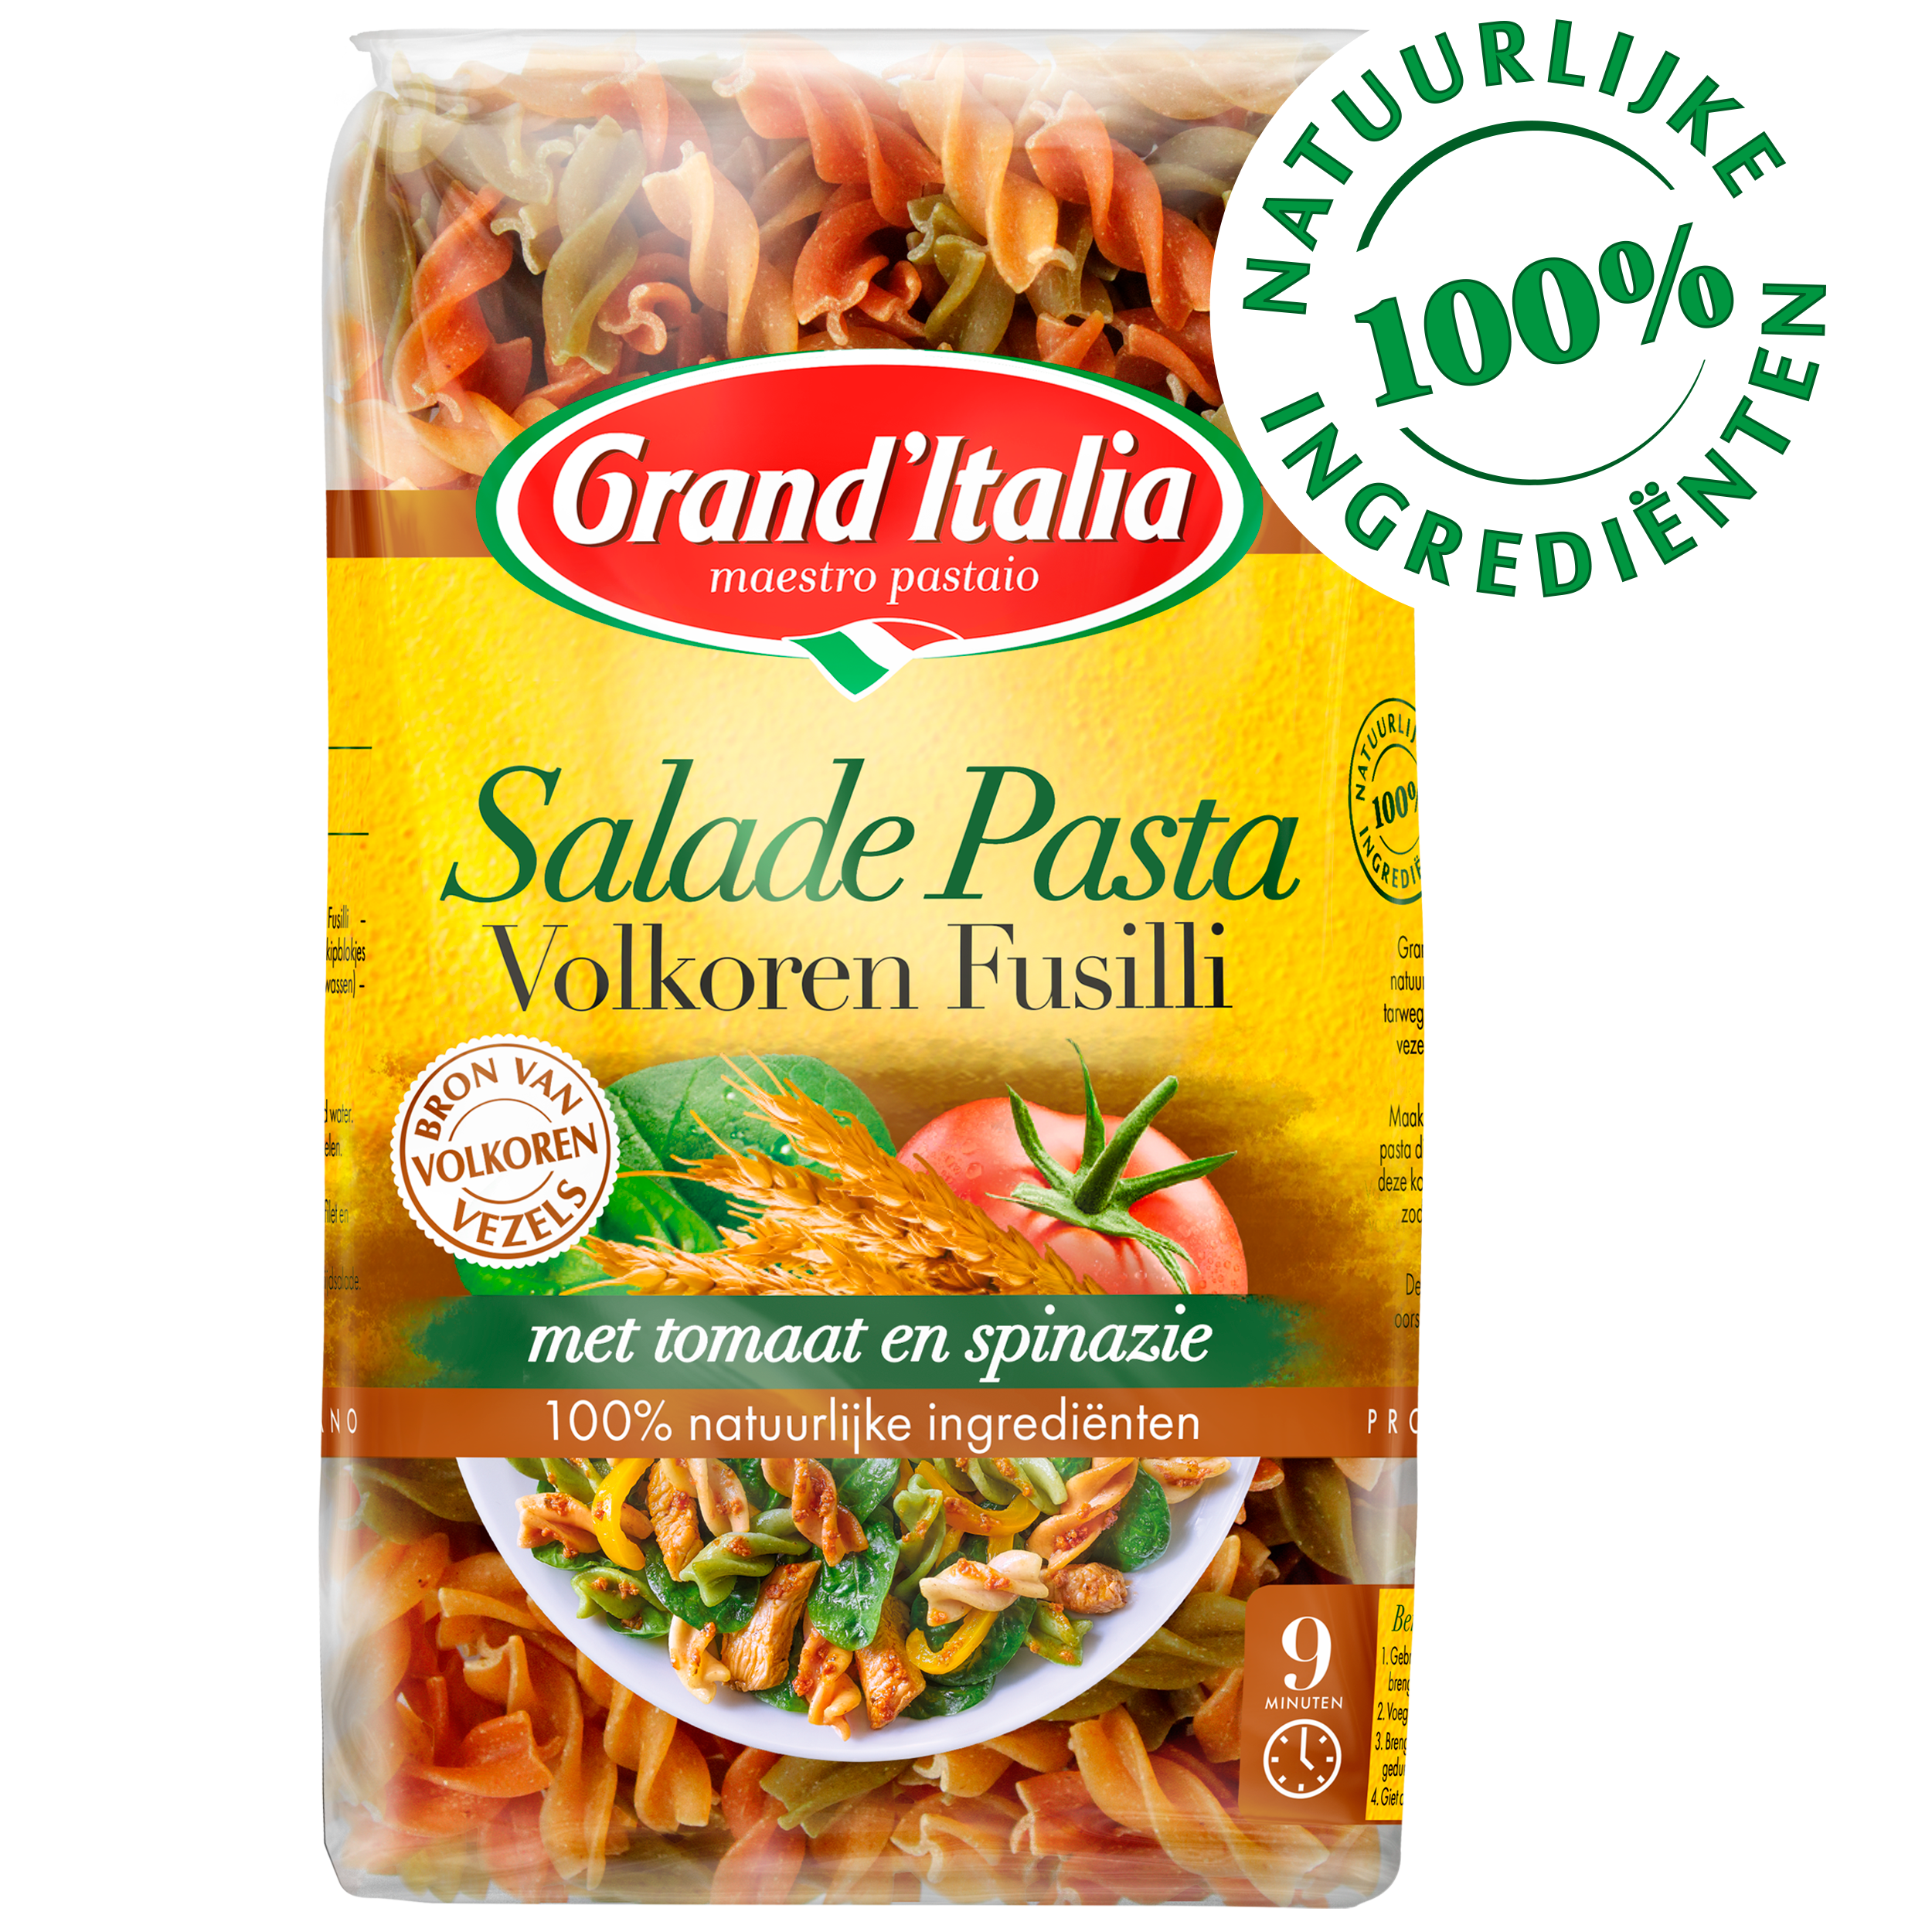 Pasta Salade Pasta Volkoren Fusilli 500g claim Grand'Italia